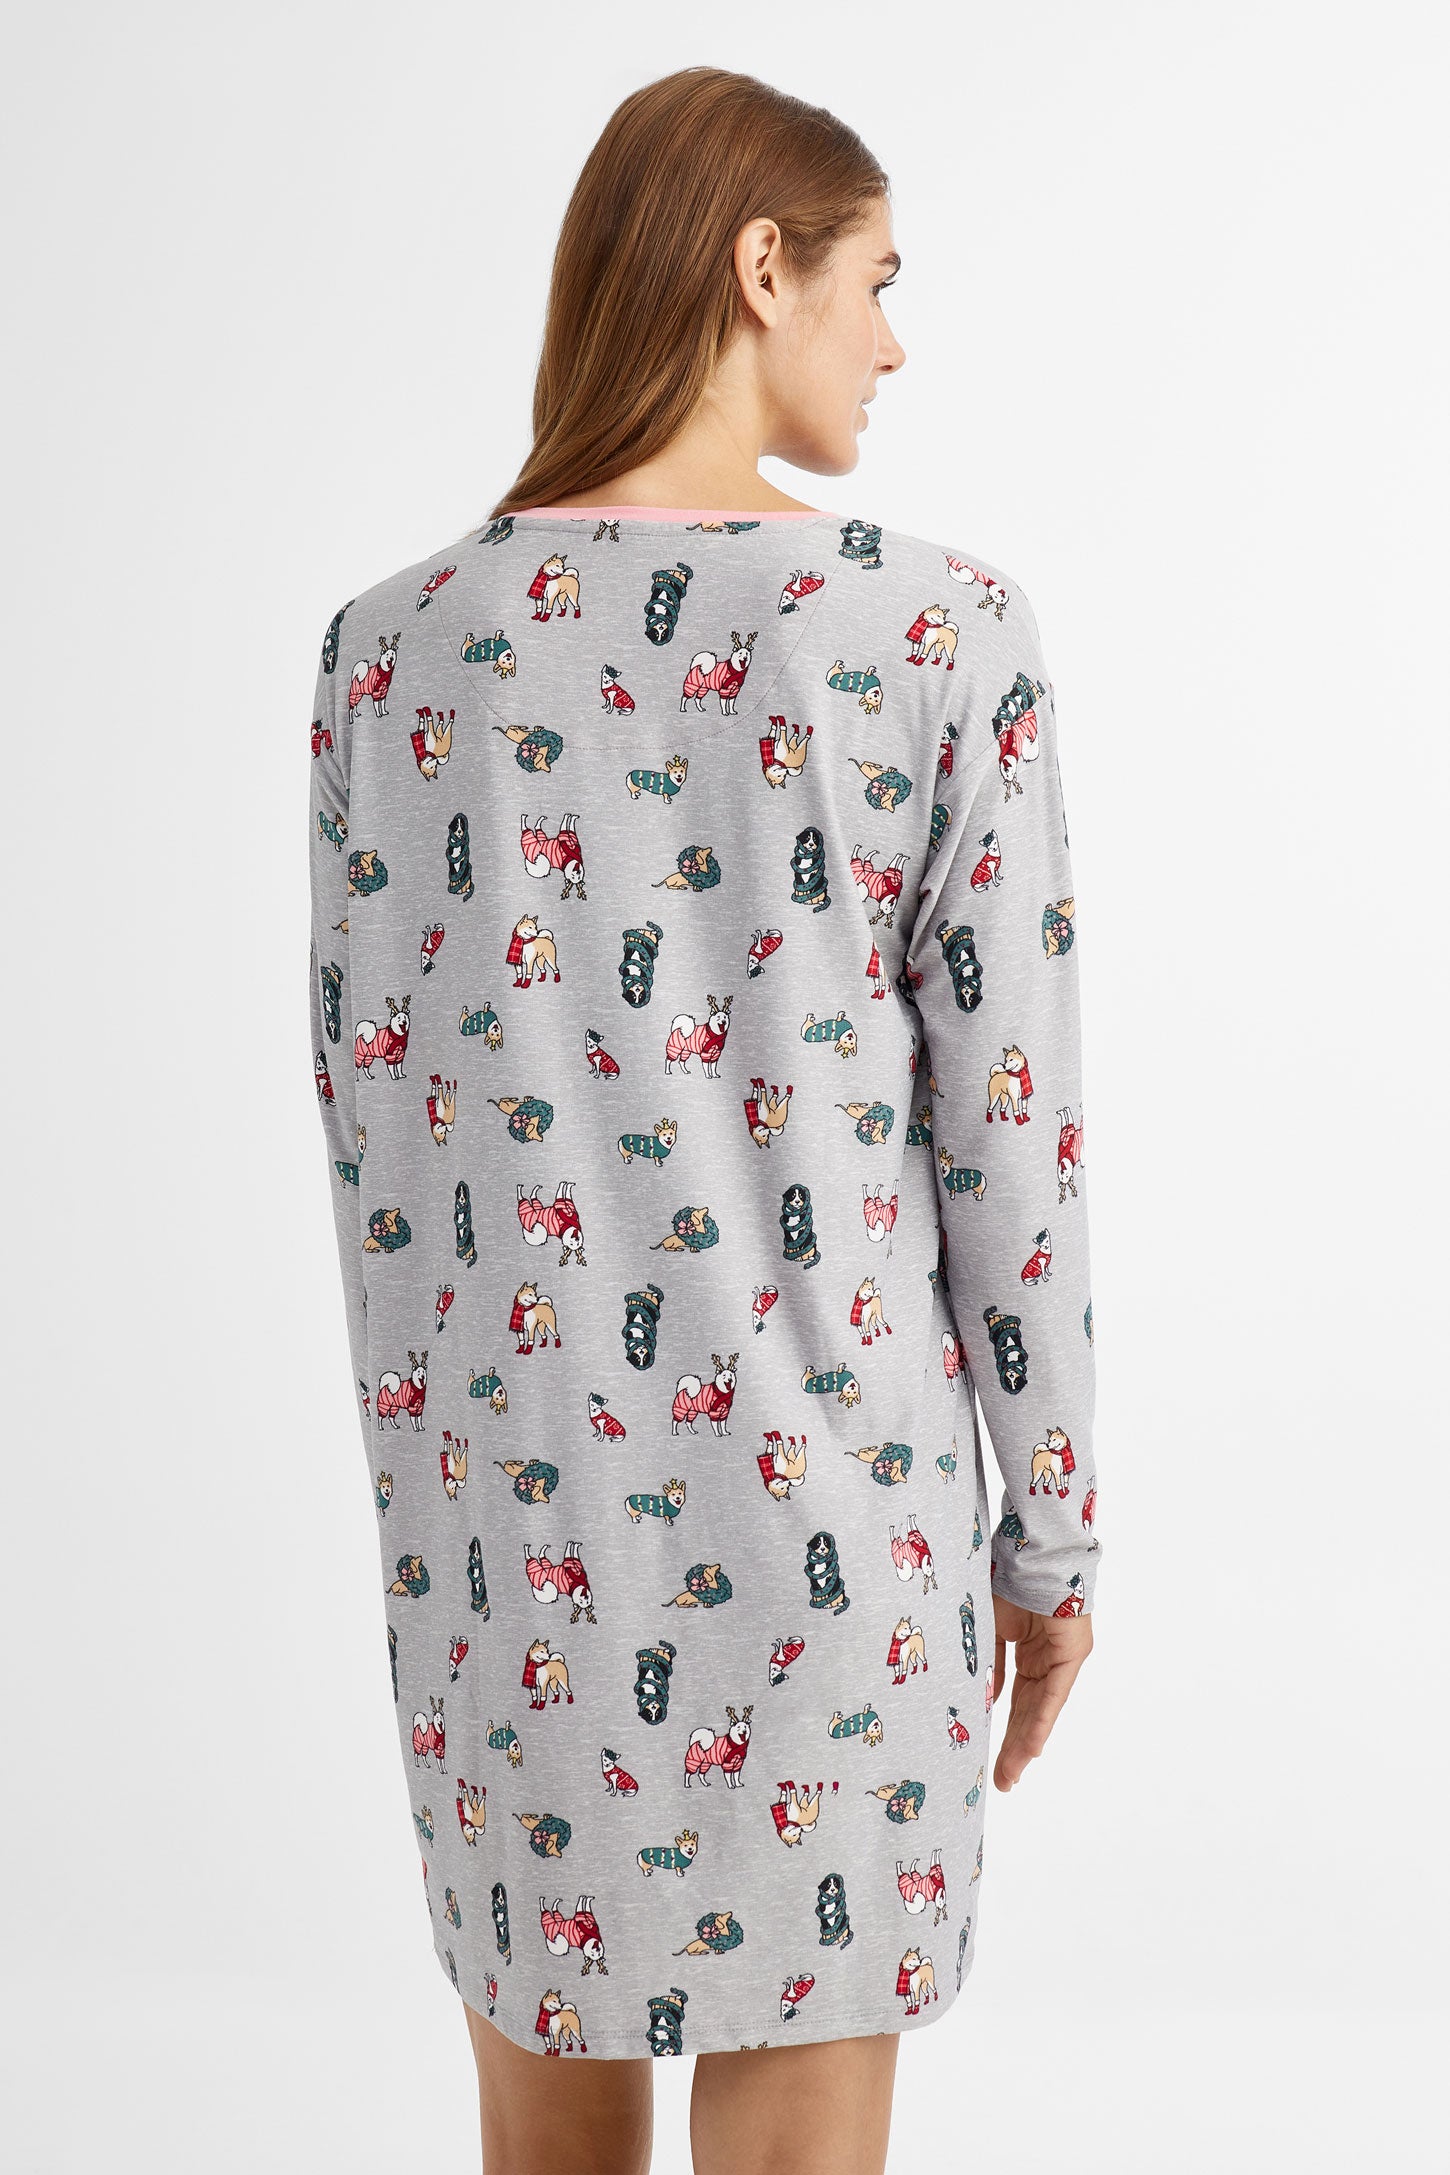 Robe de nuit pyjama de Noël en Moss - Femme && GRIS MULTI